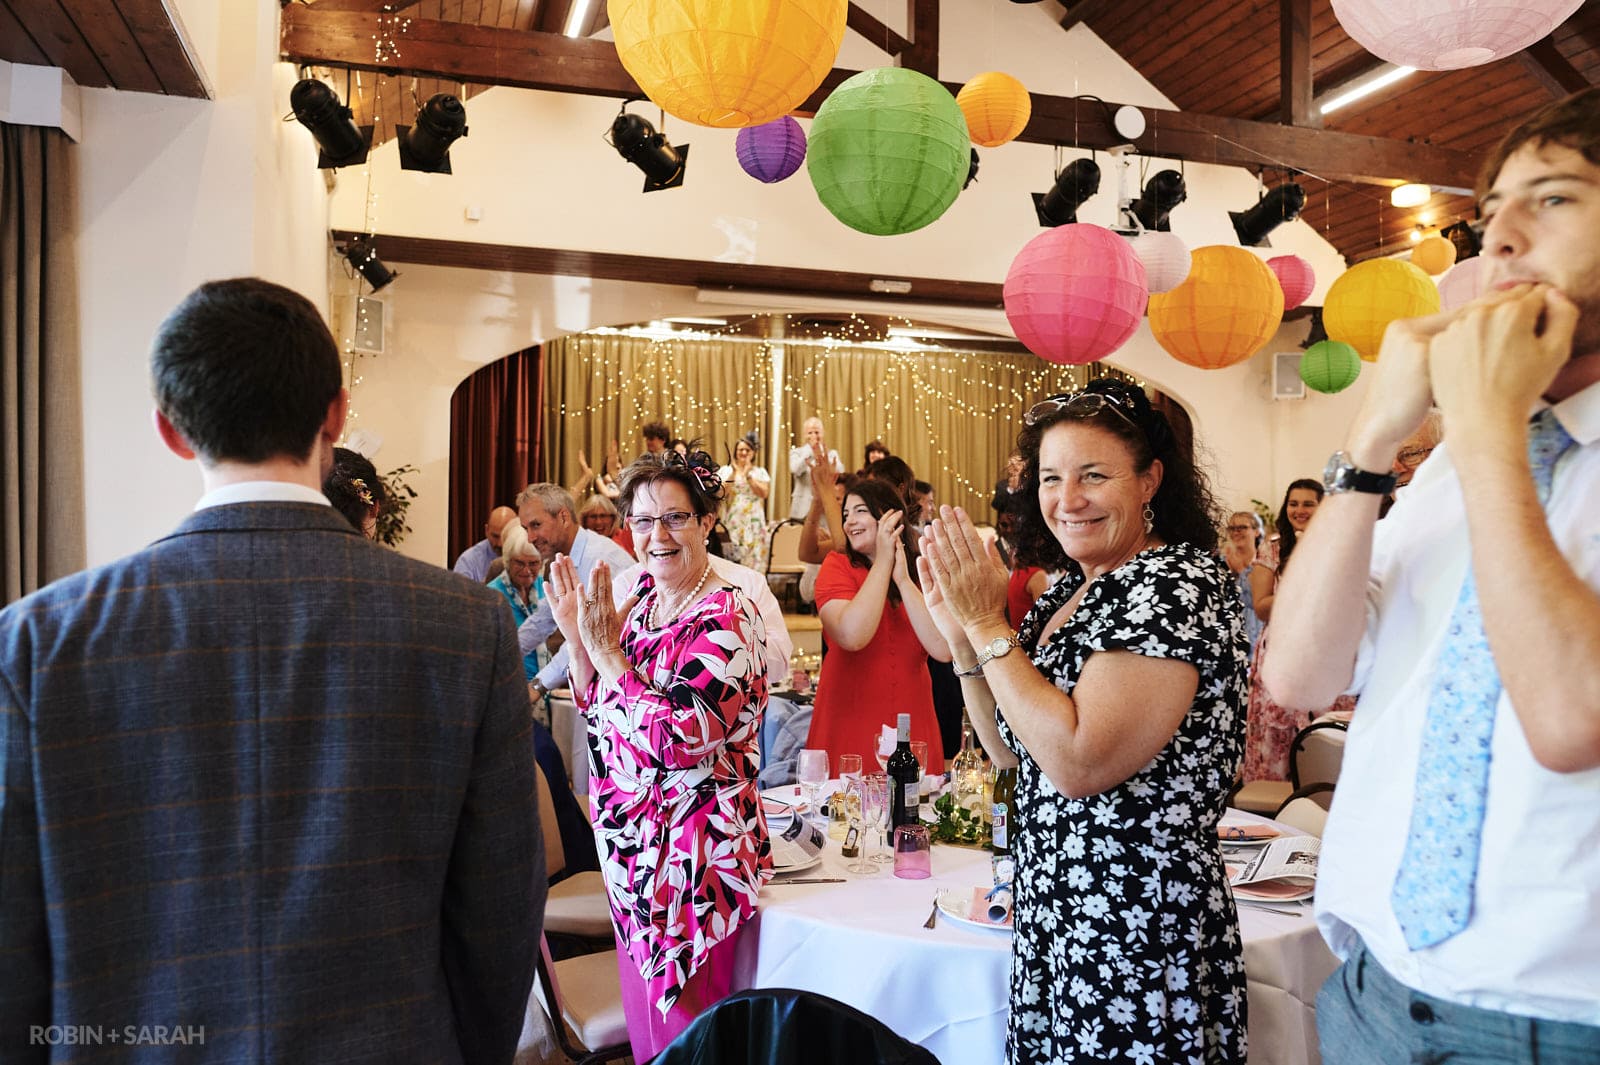 Wedding guests clap as bride and groom enter village hall for wedding reception